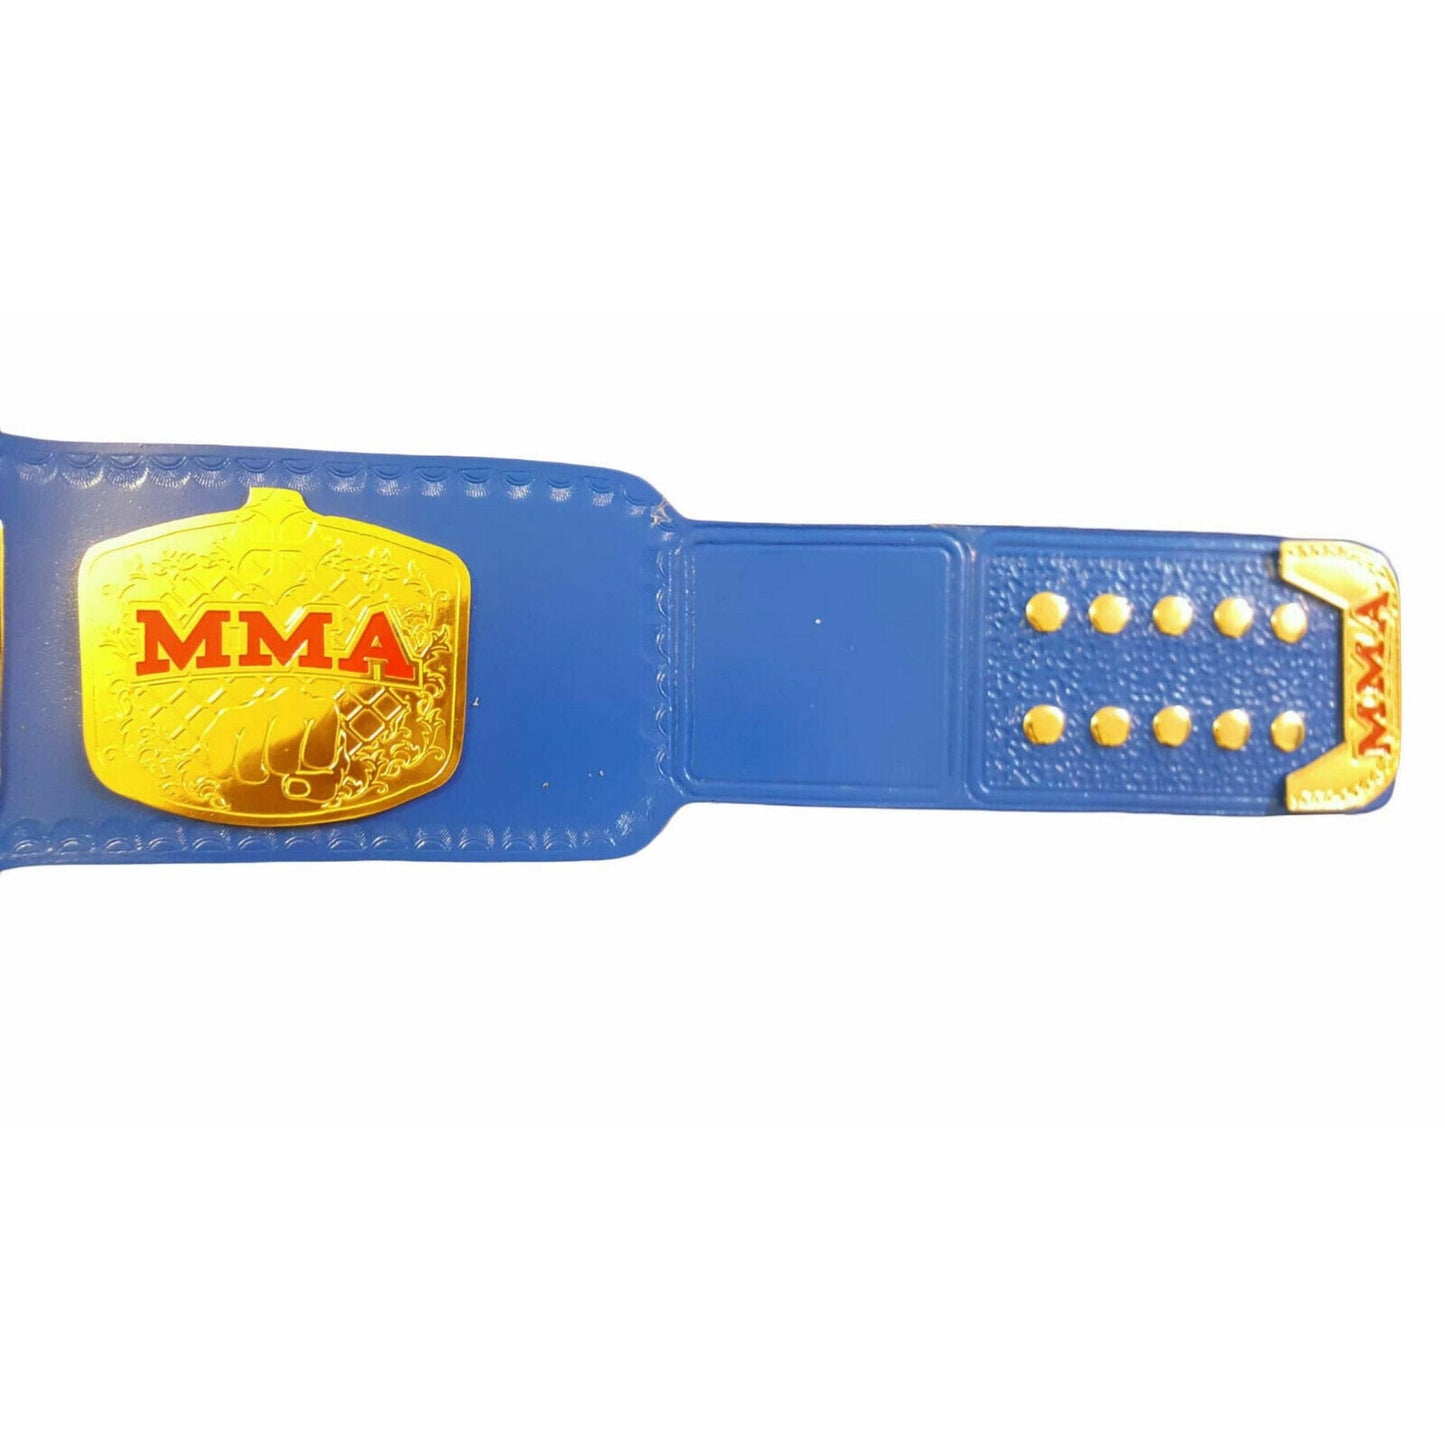 MMA Championship Replica Title Belt